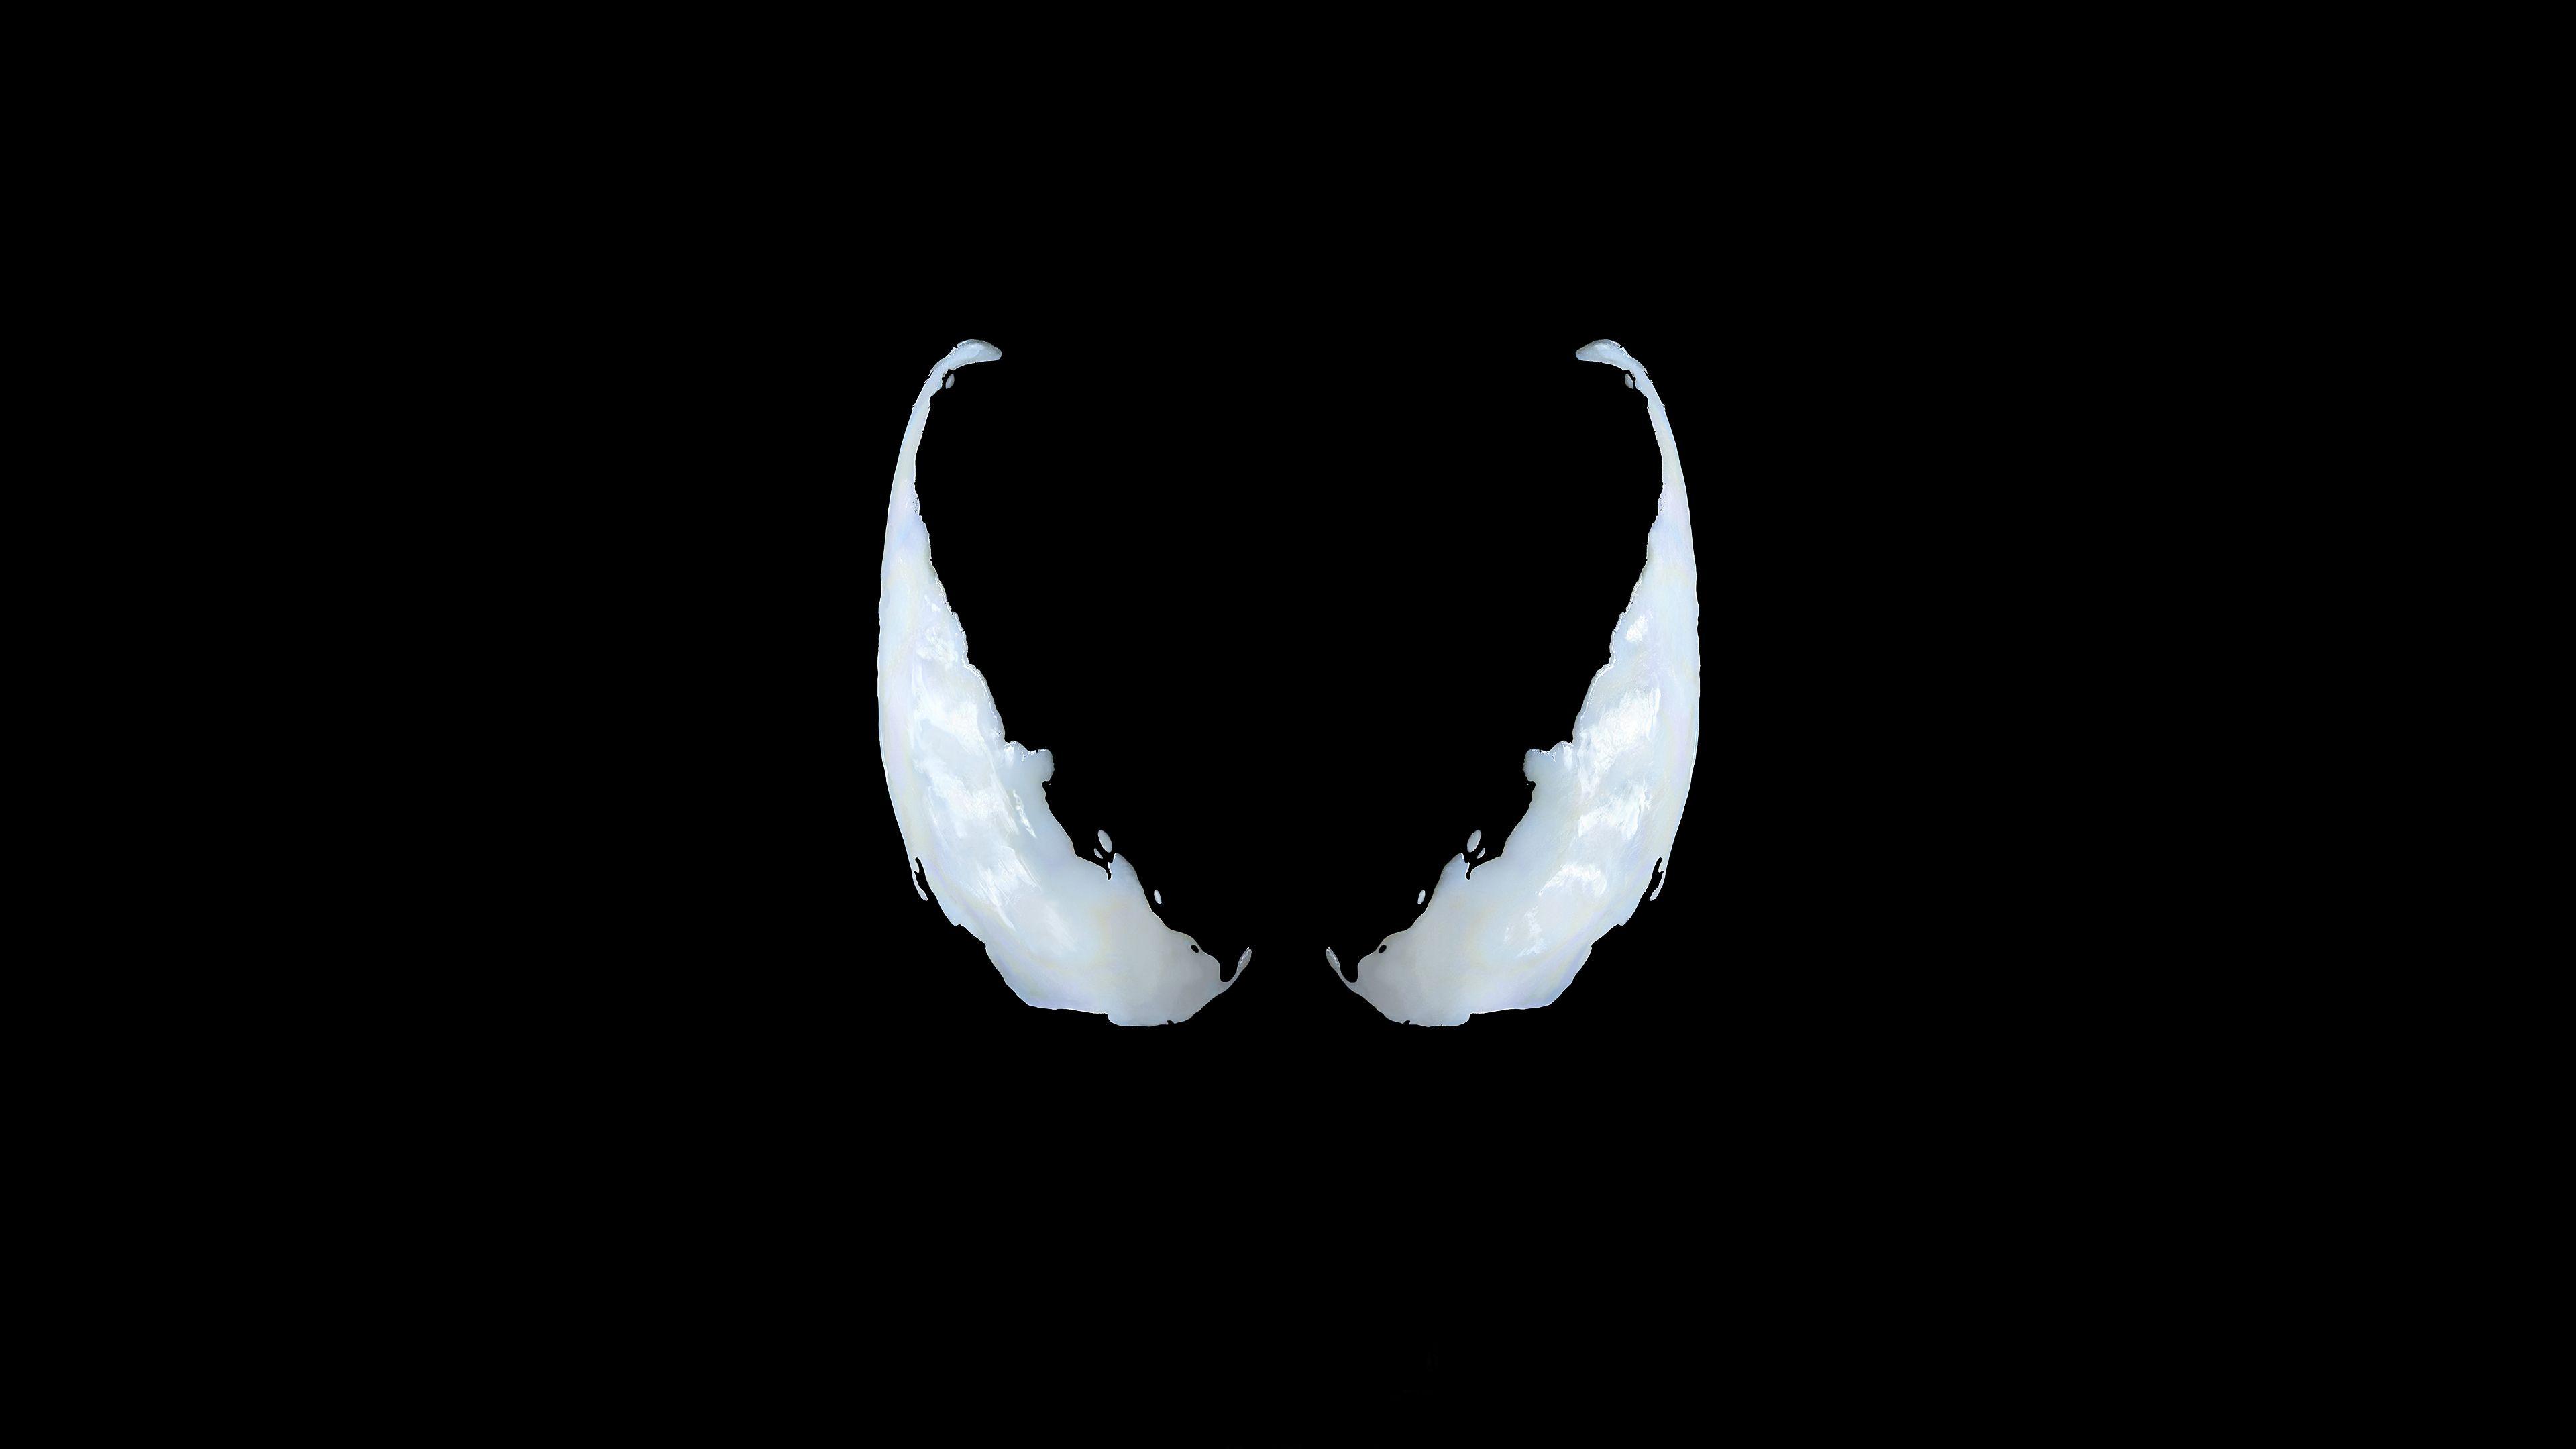 Venom 2018 Movie Poster, HD Movies, 4k Wallpaper, Image